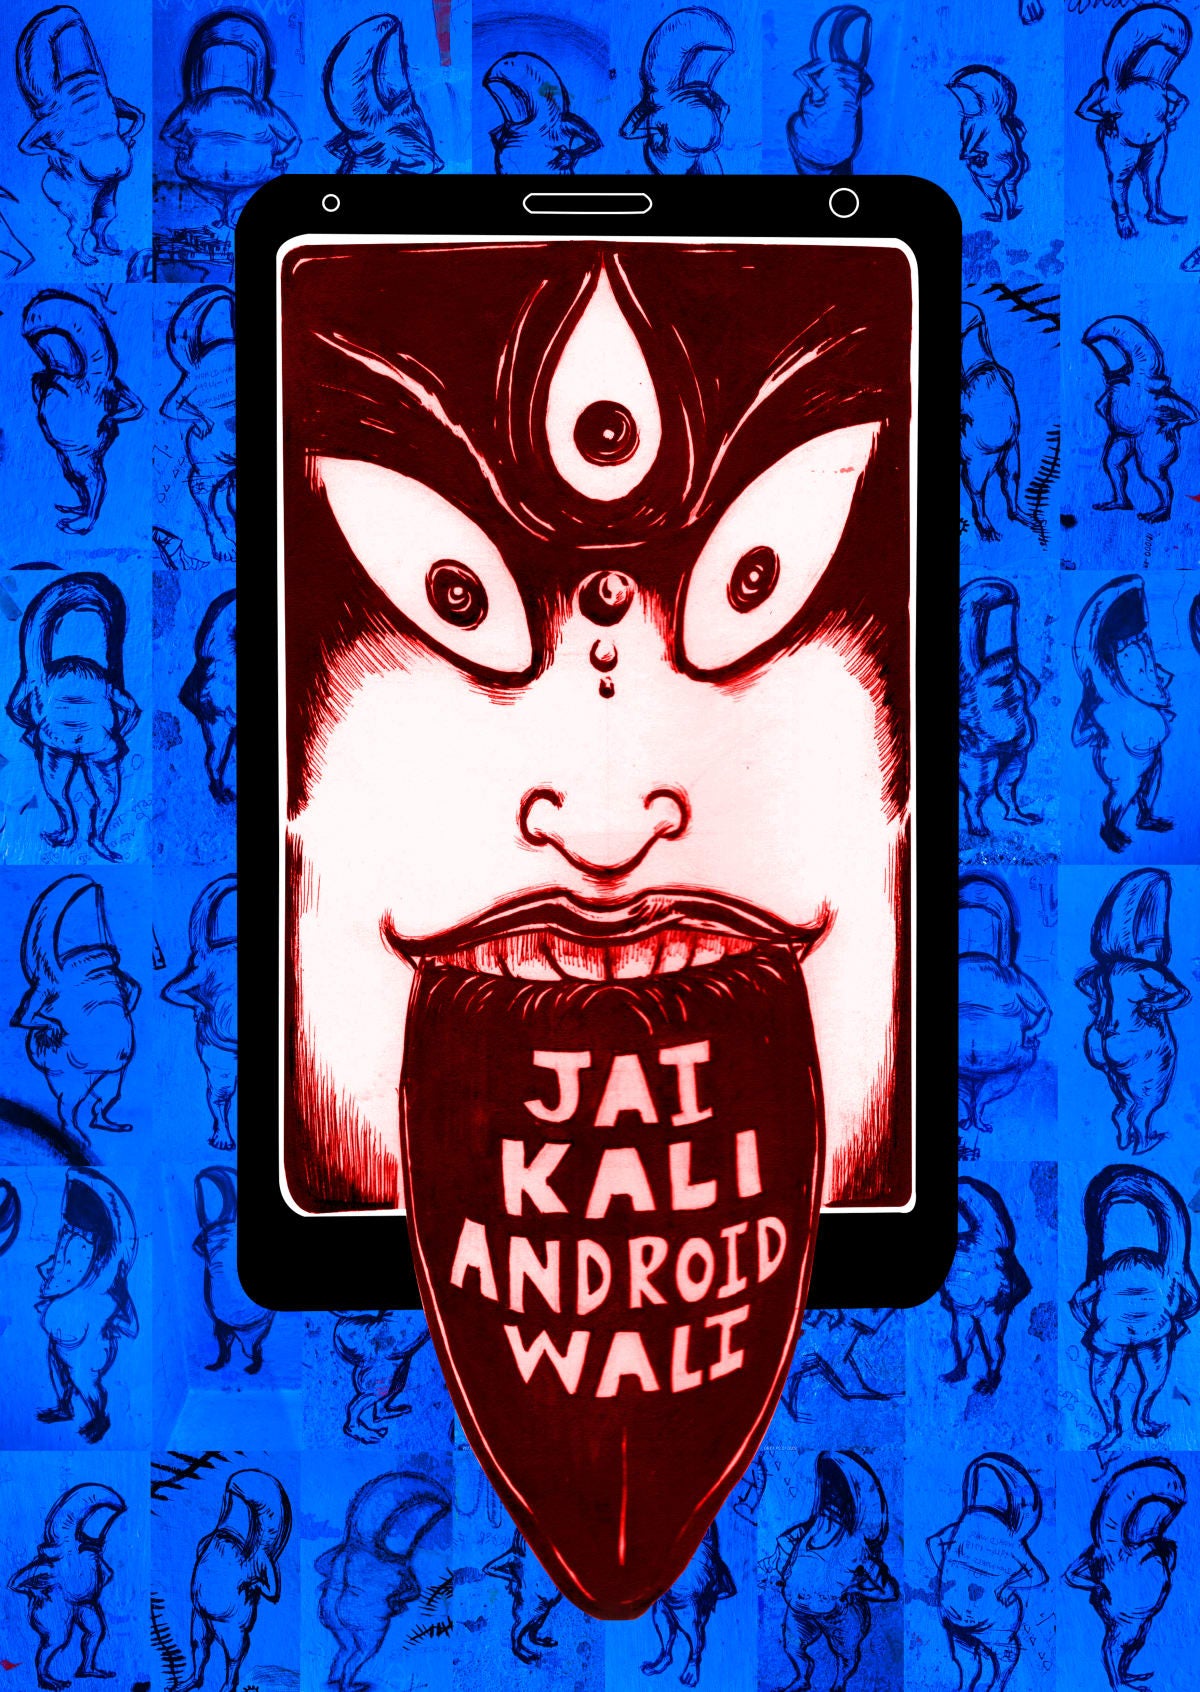 Jai Kali Android Wali